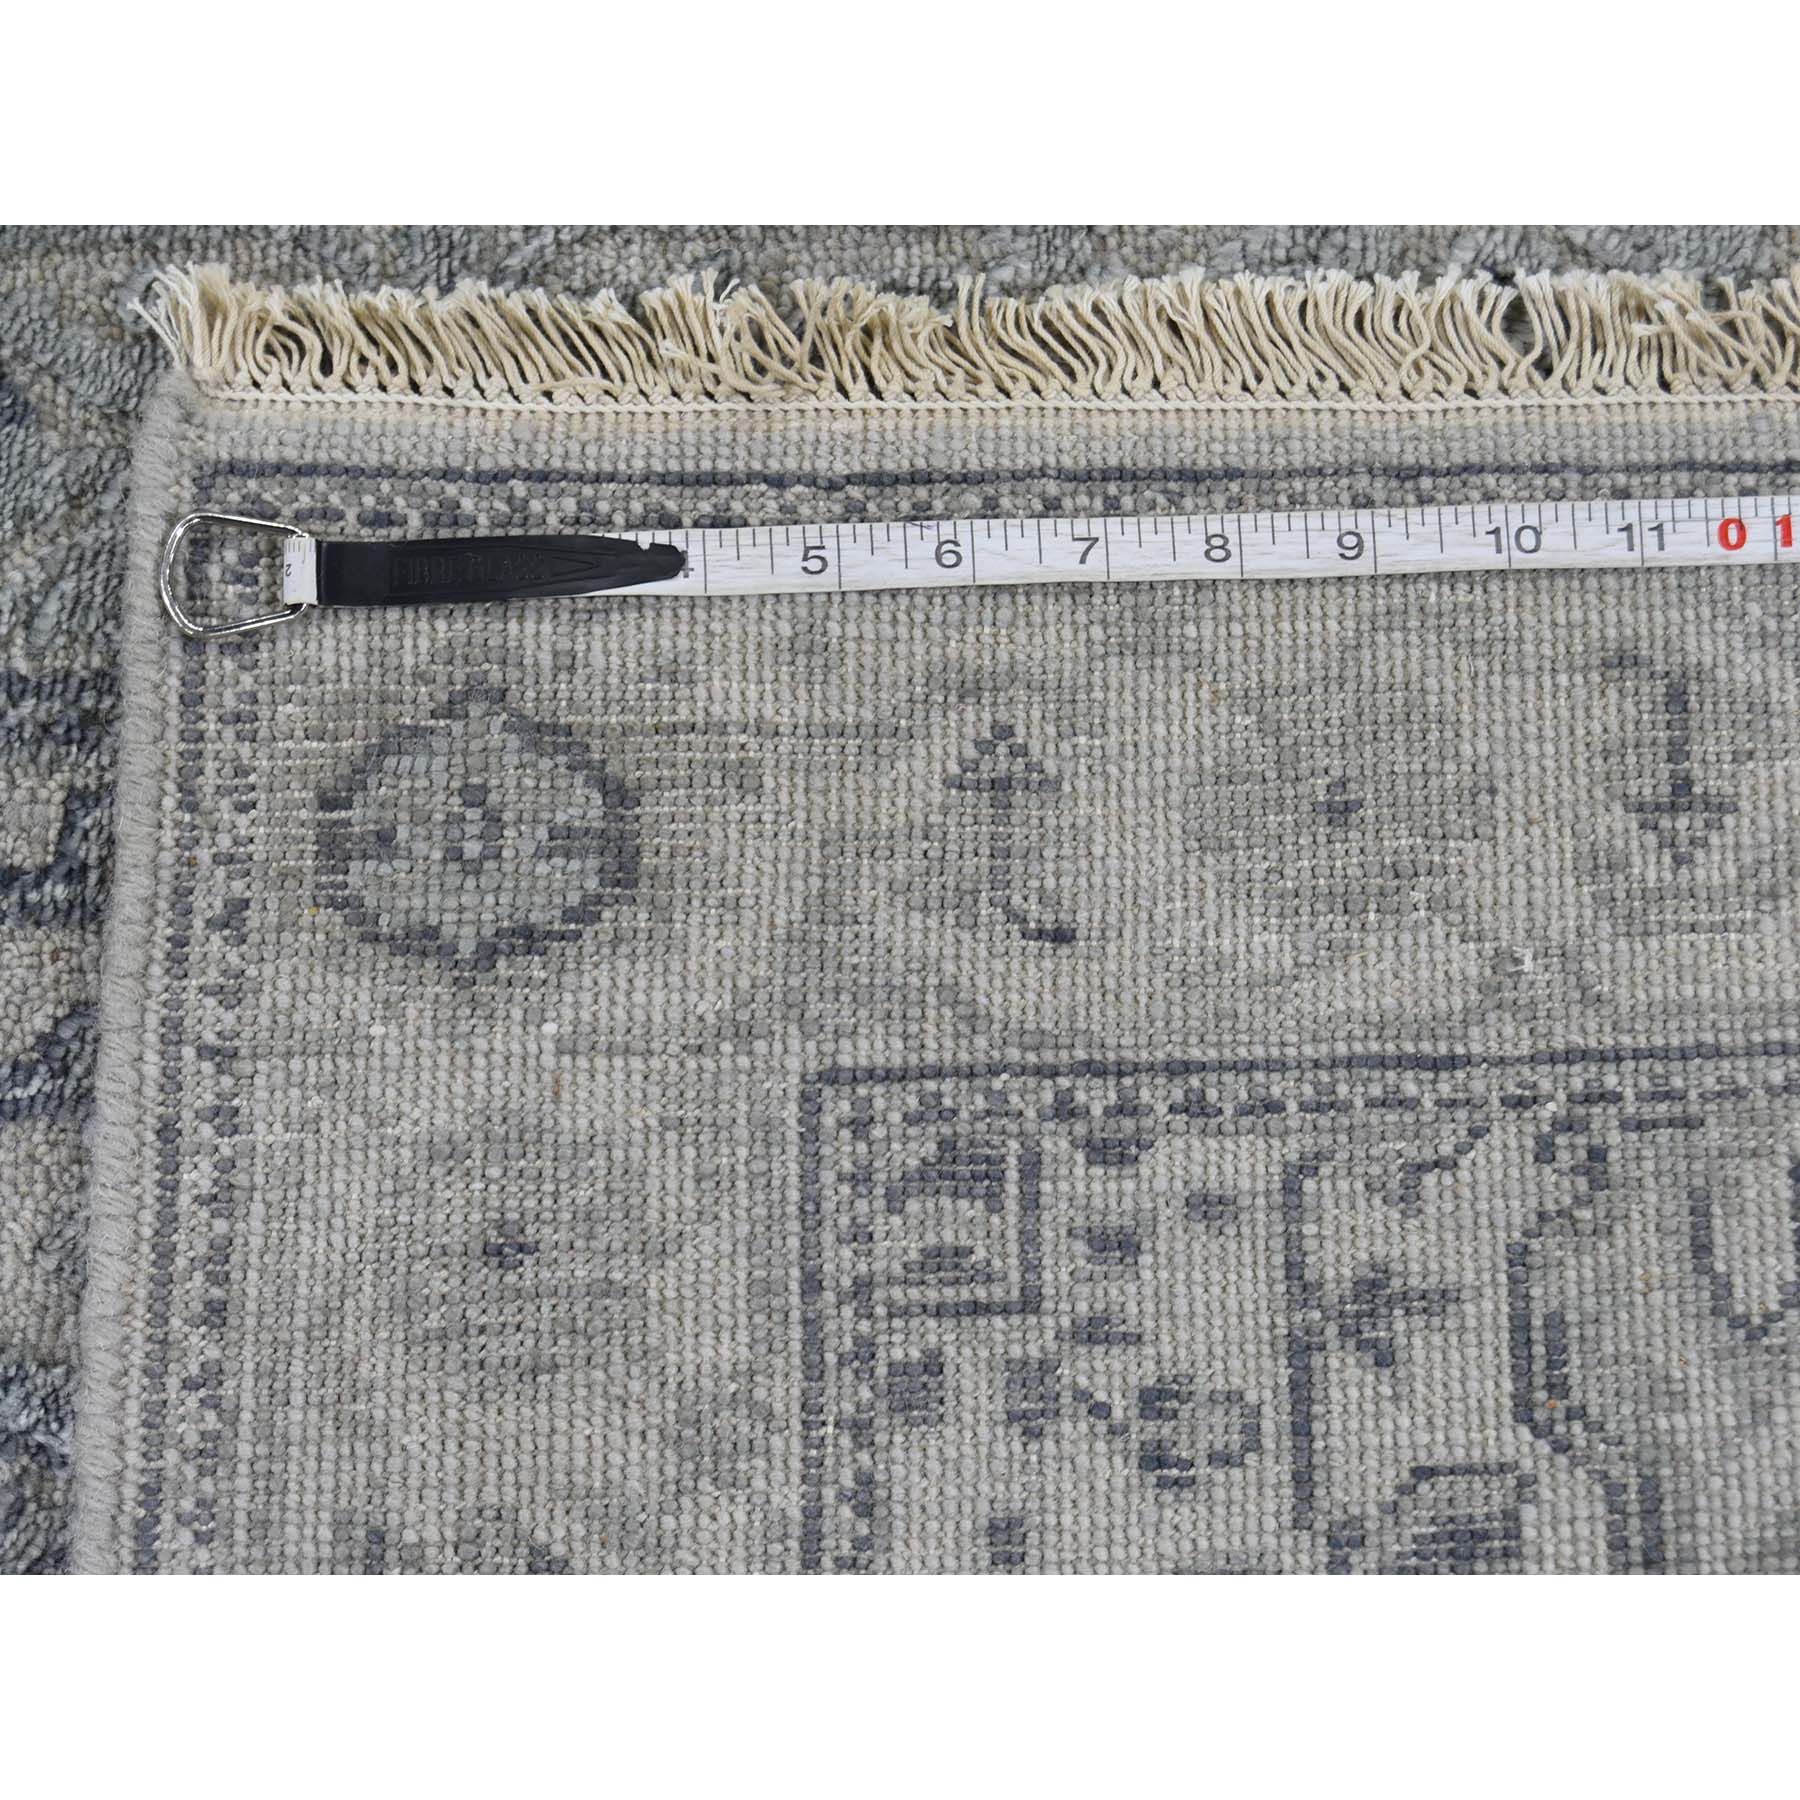 2-7 x10- Wool And Silk Heriz Design Grey Hand-Knotted Runner Oriental Rug 